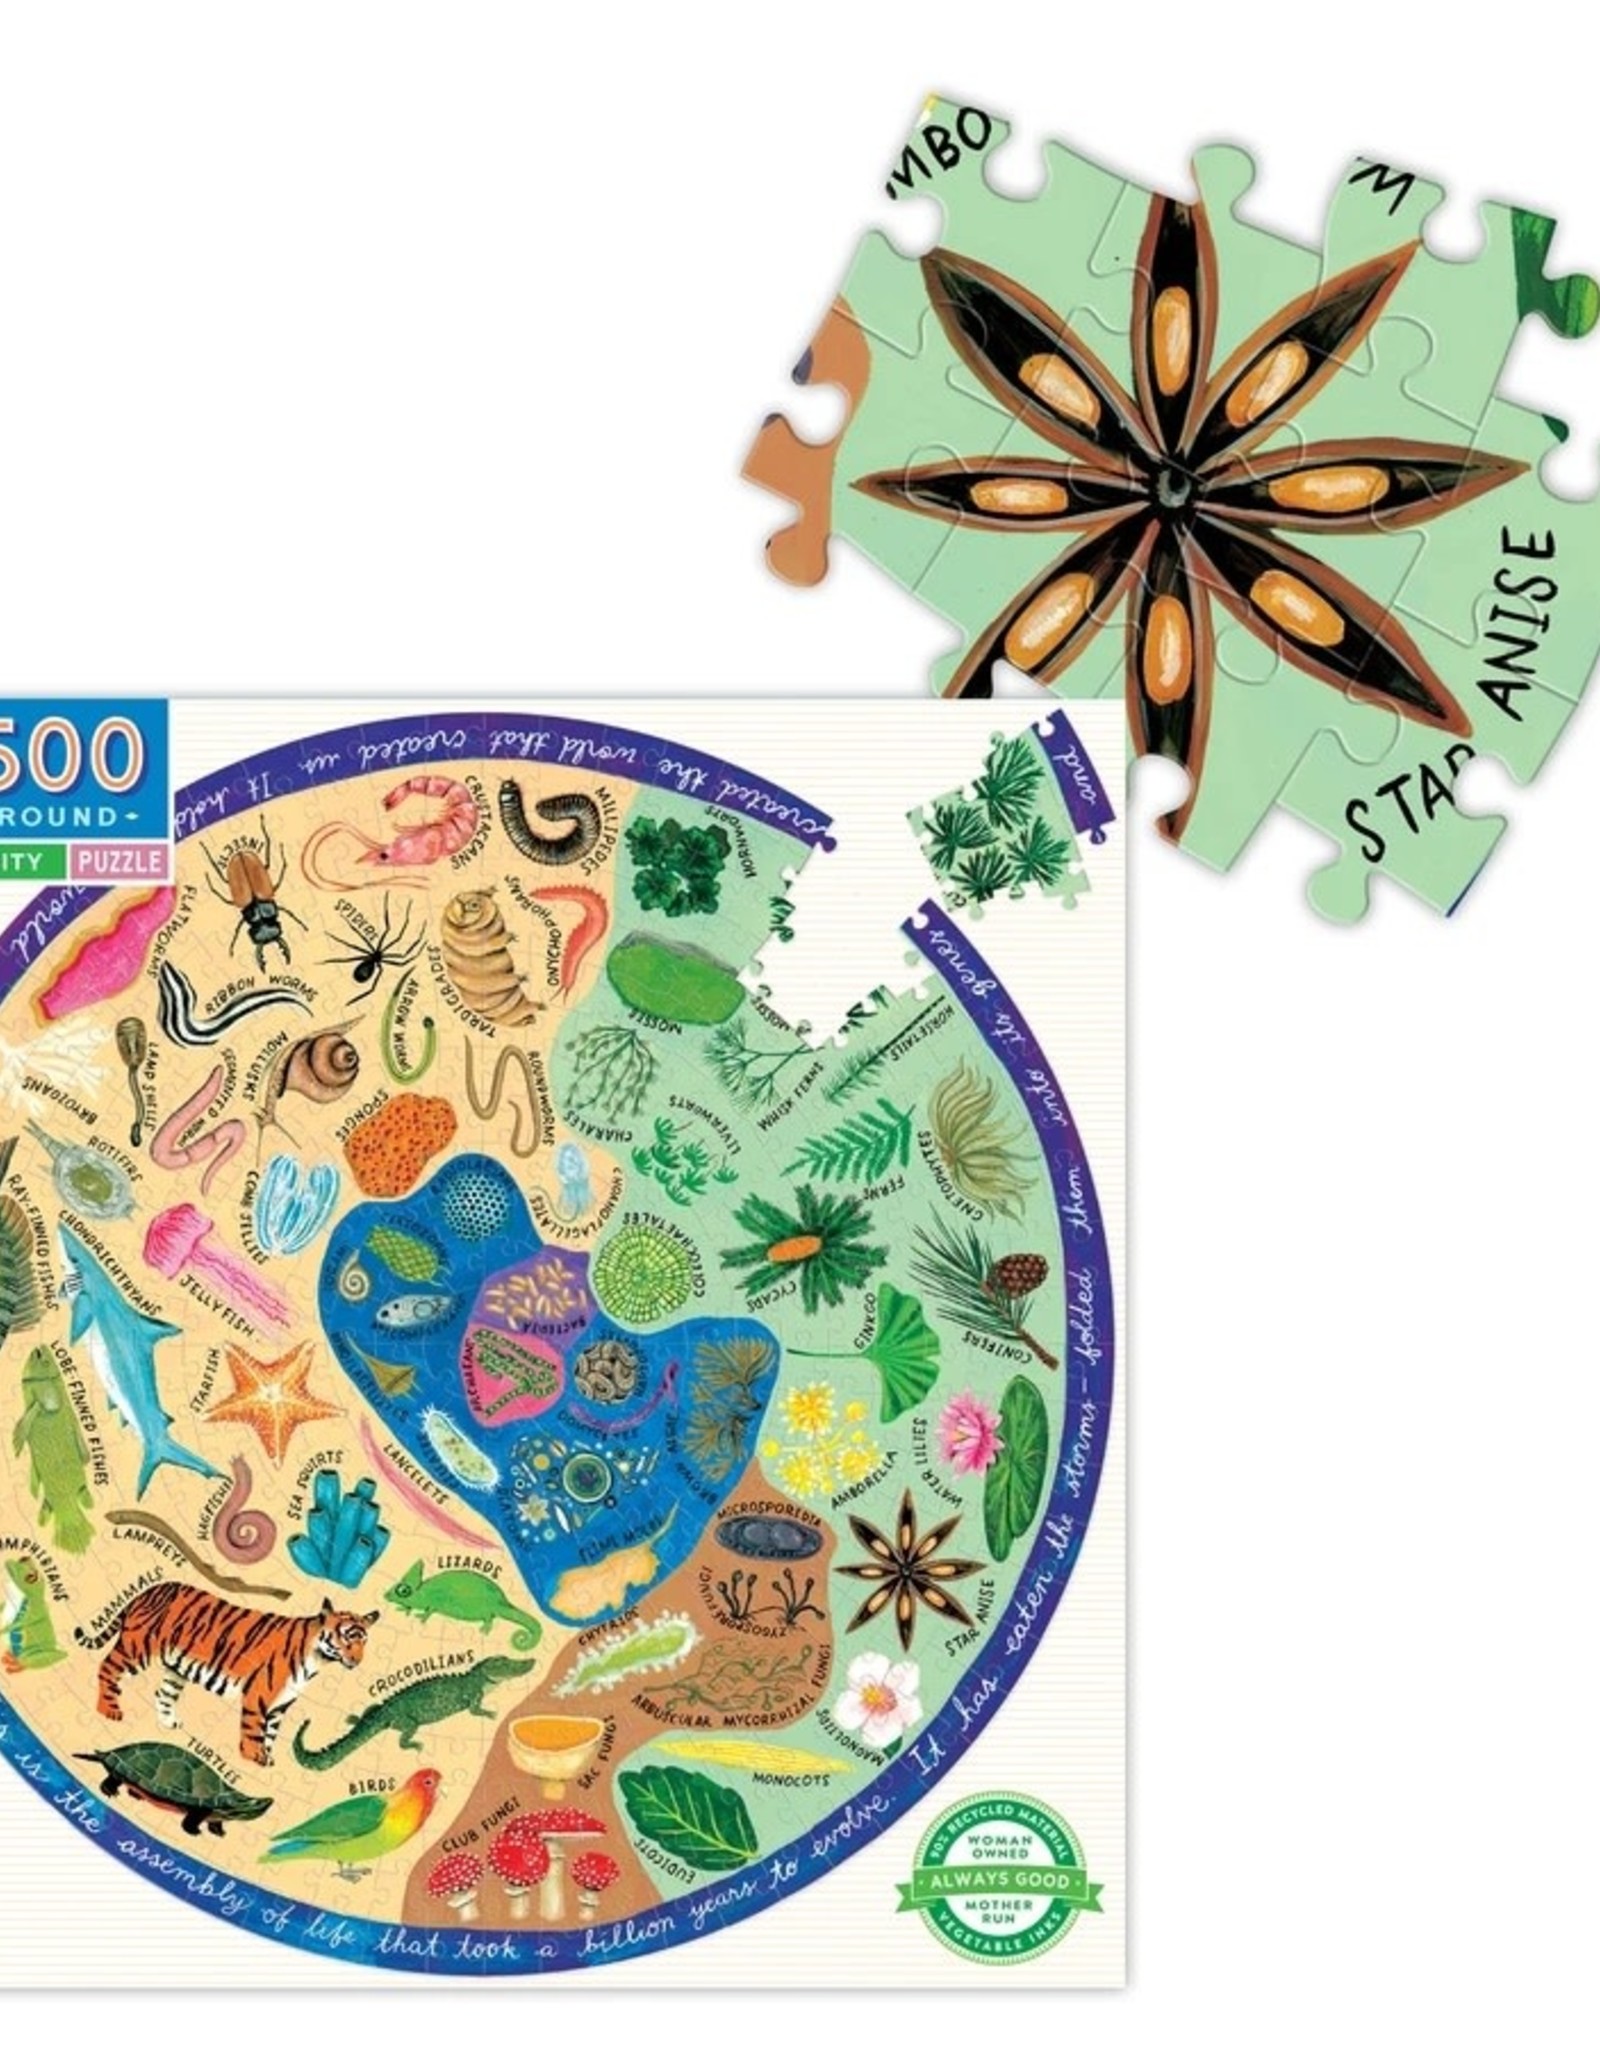 Eeboo 500 Piece Biodiversity Round Puzzle